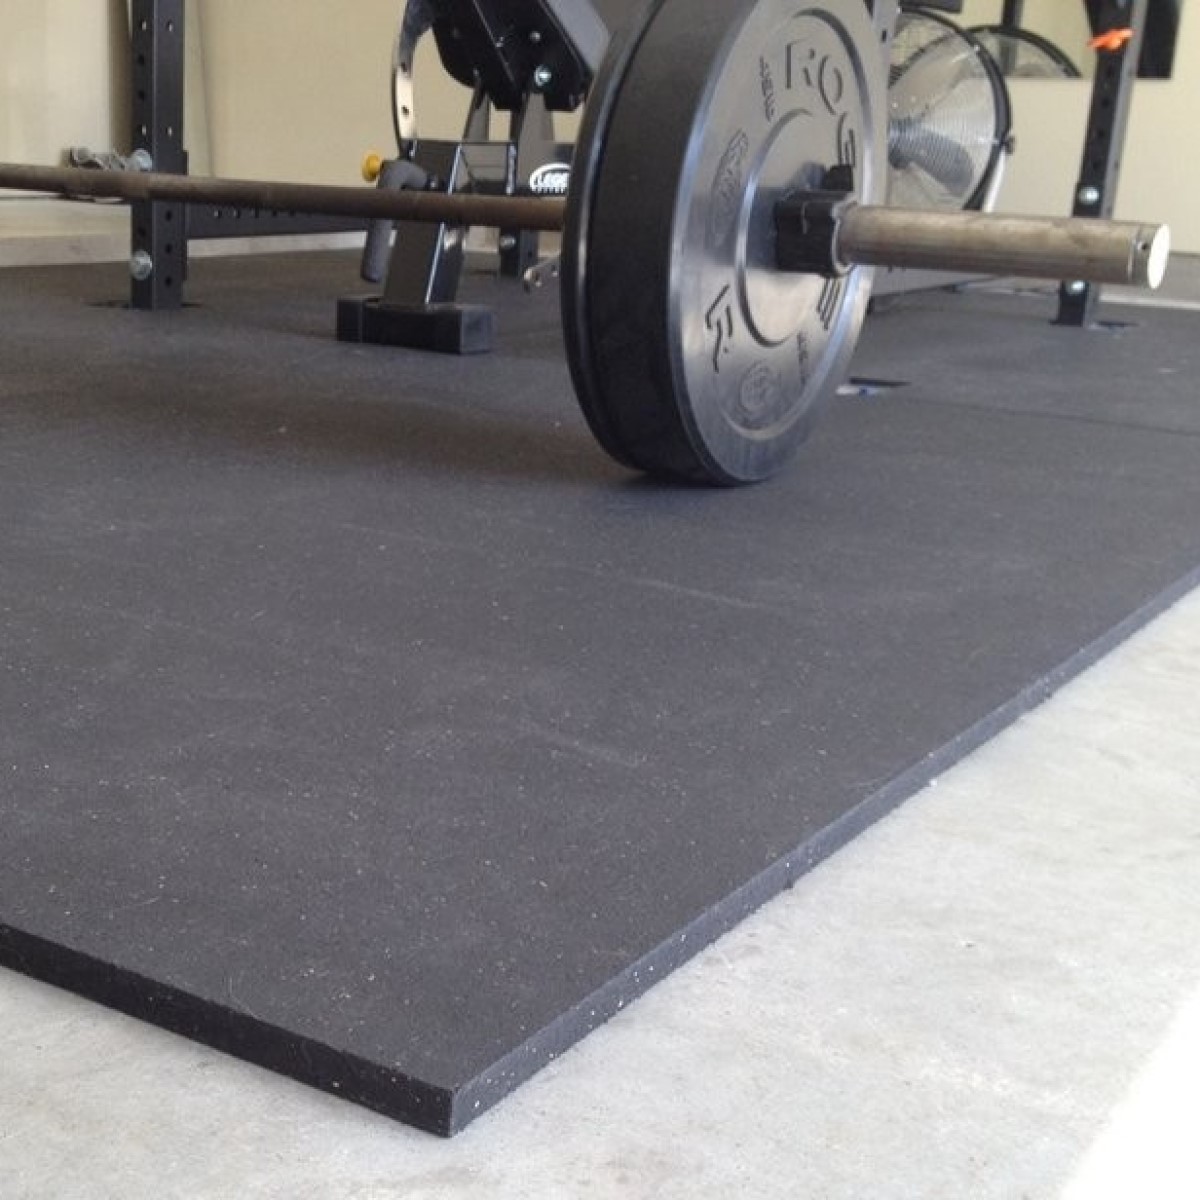 Gym Flooring Guide Rubber Mats And, Exercise Equipment Mats Hardwood Floors